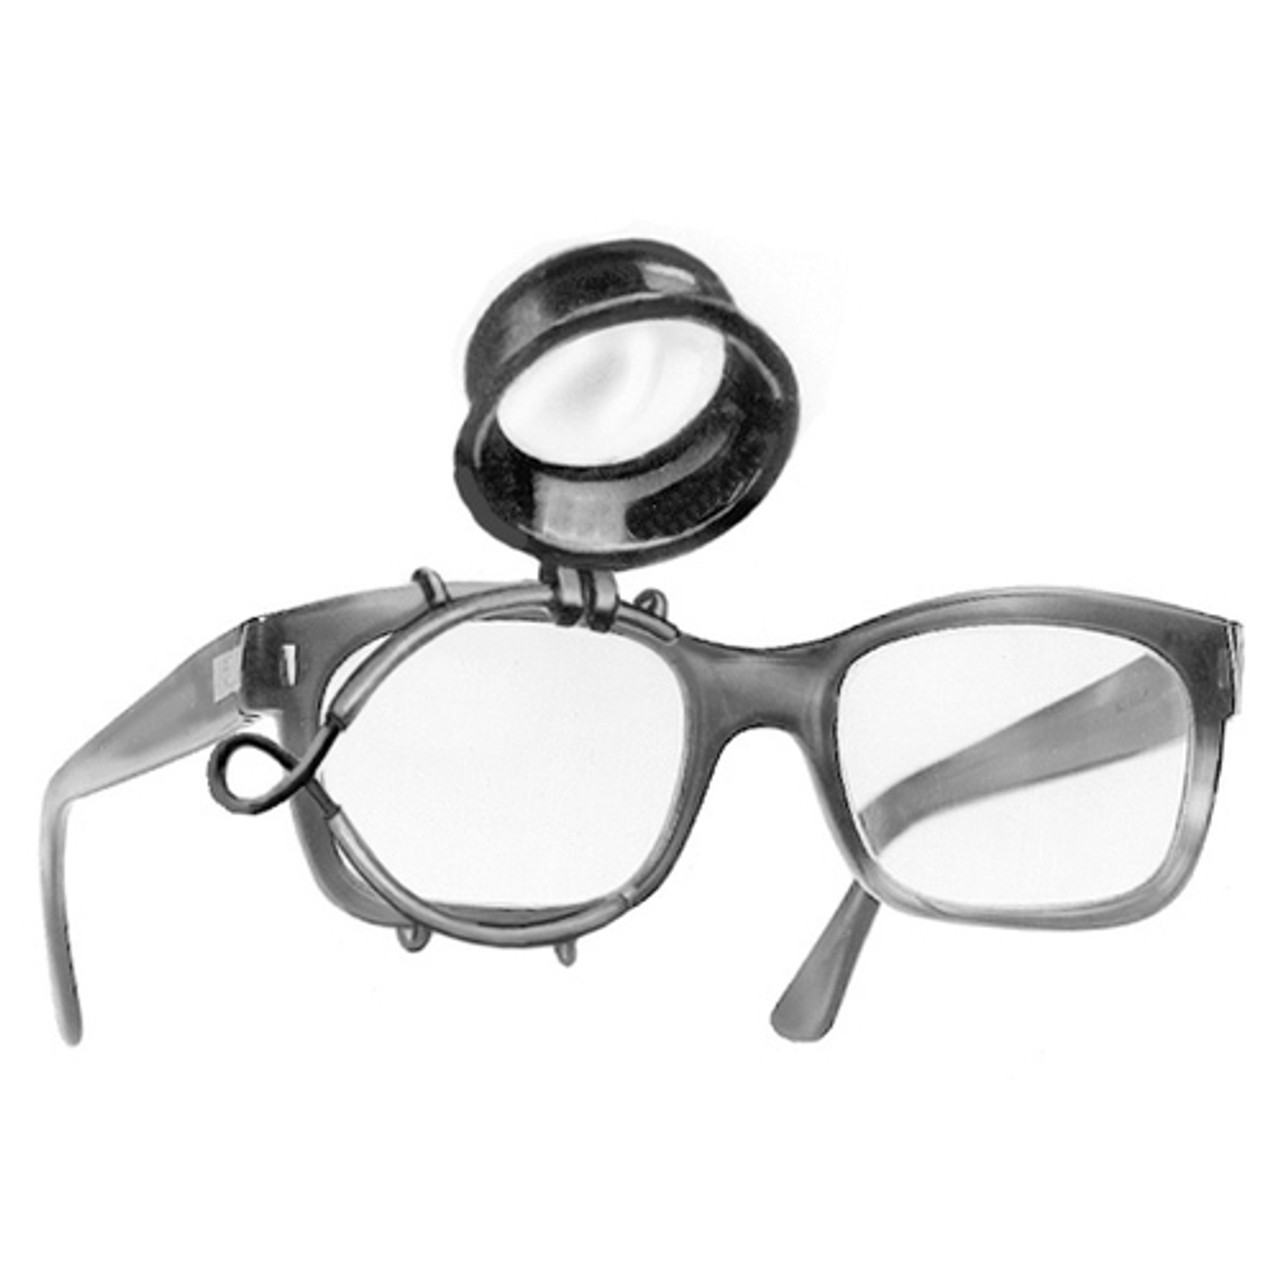 Original Ary Swiss Made Standard Loupe Eyeglass Attachment Magnifier